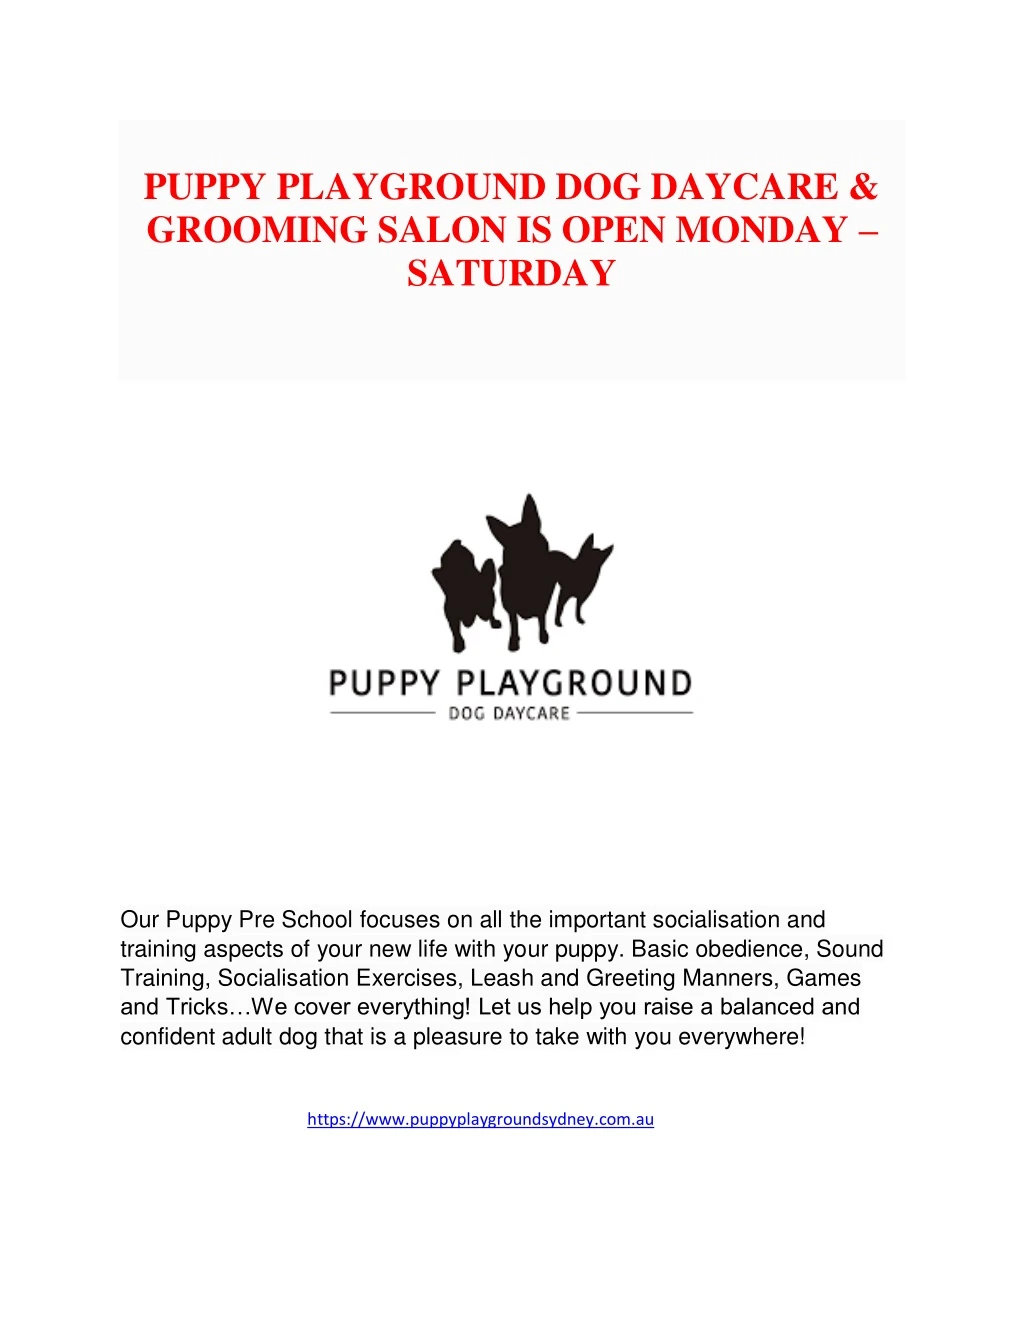 puppy playground dog daycare grooming salon